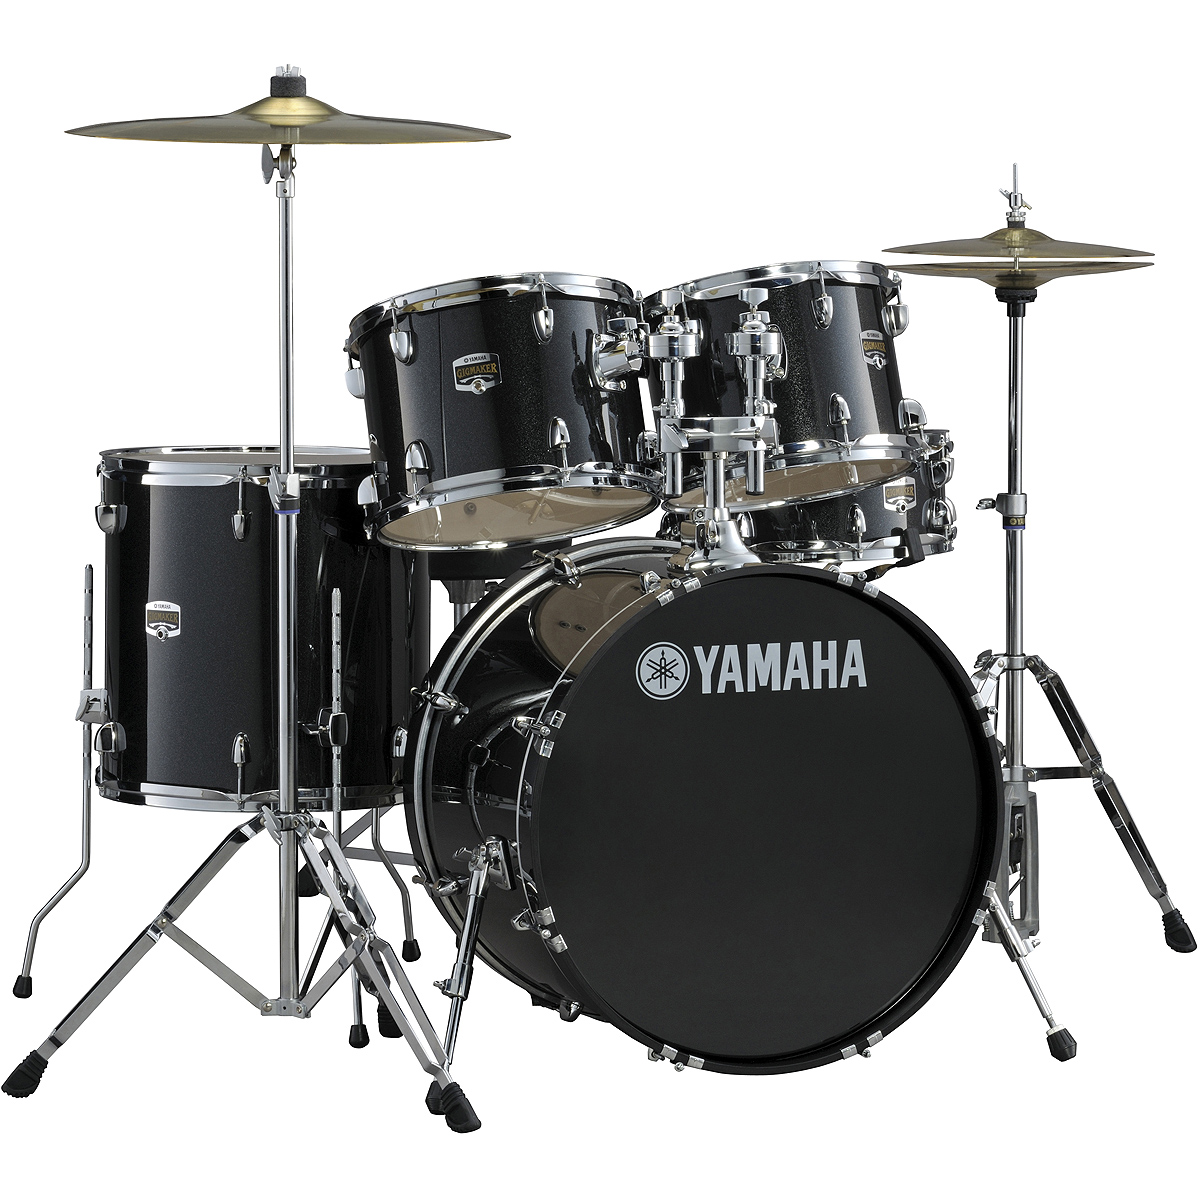 Yamaha GigMaker Drum Set - Acoustic Drum Set | Find your Drum Set